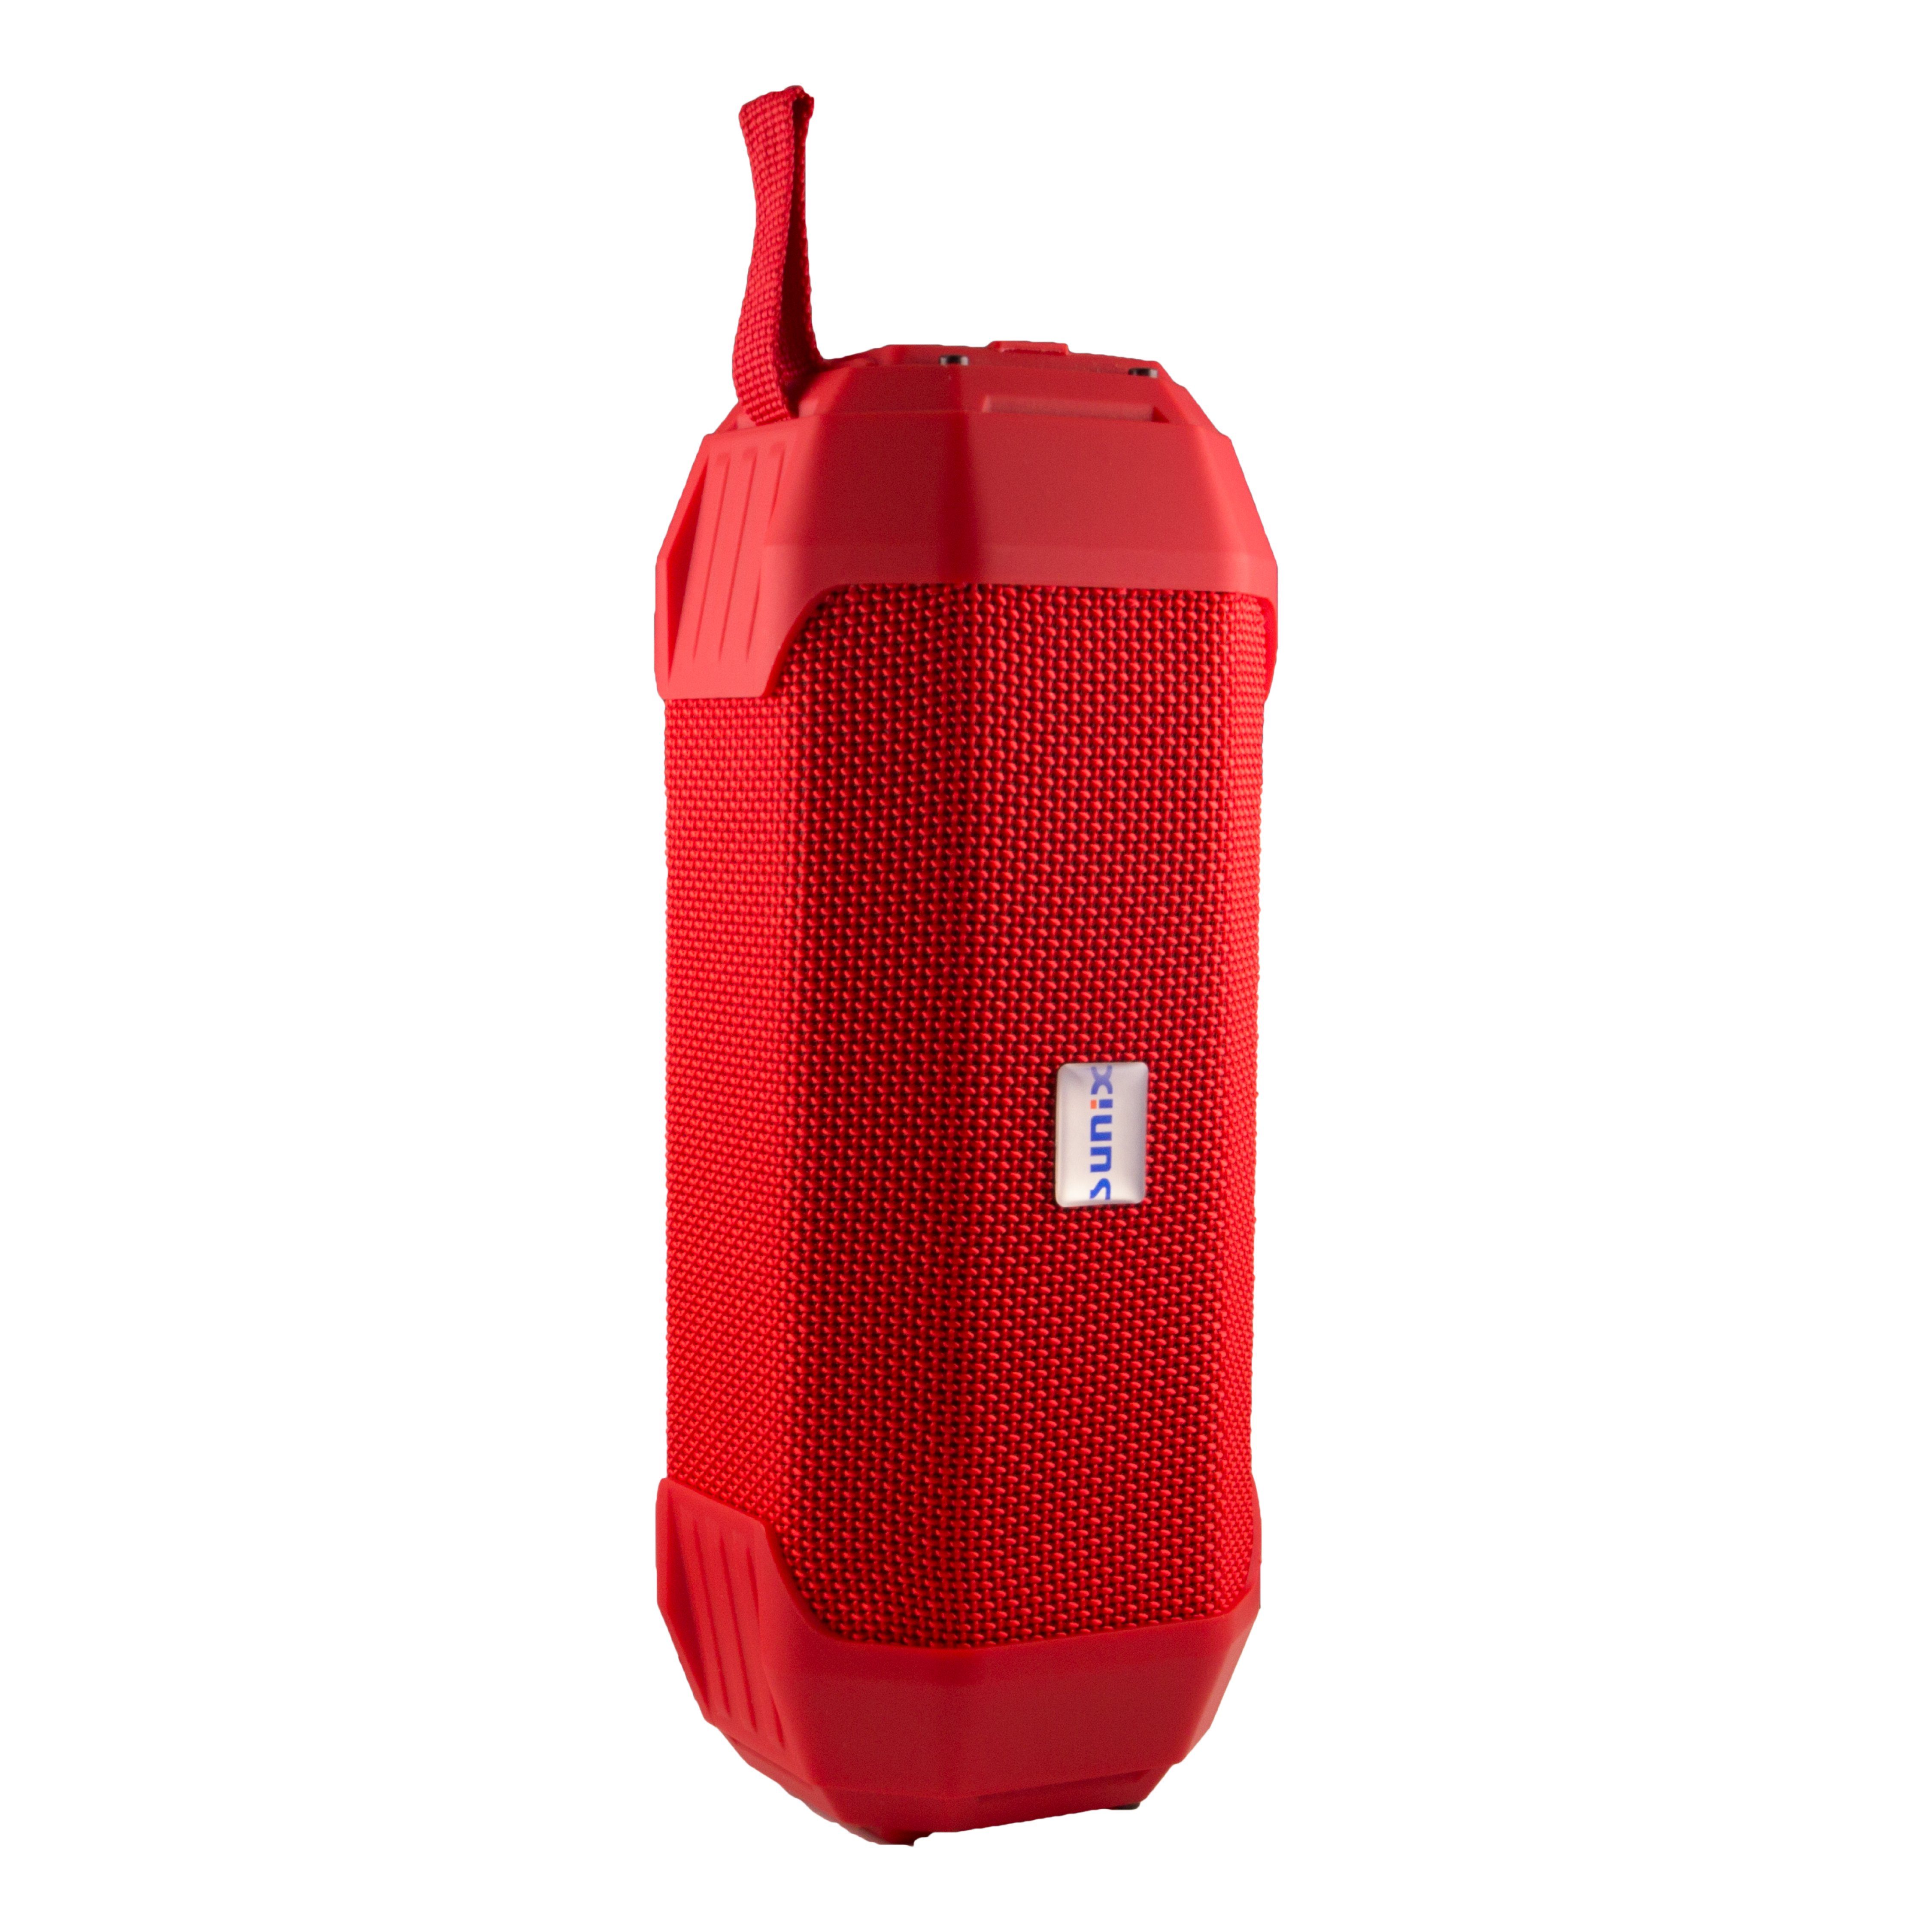 Sunix Sunix Lautsprecher Rot Wireless Bluetooth Mikrofon integriertes Bluetooth-Lautsprecher